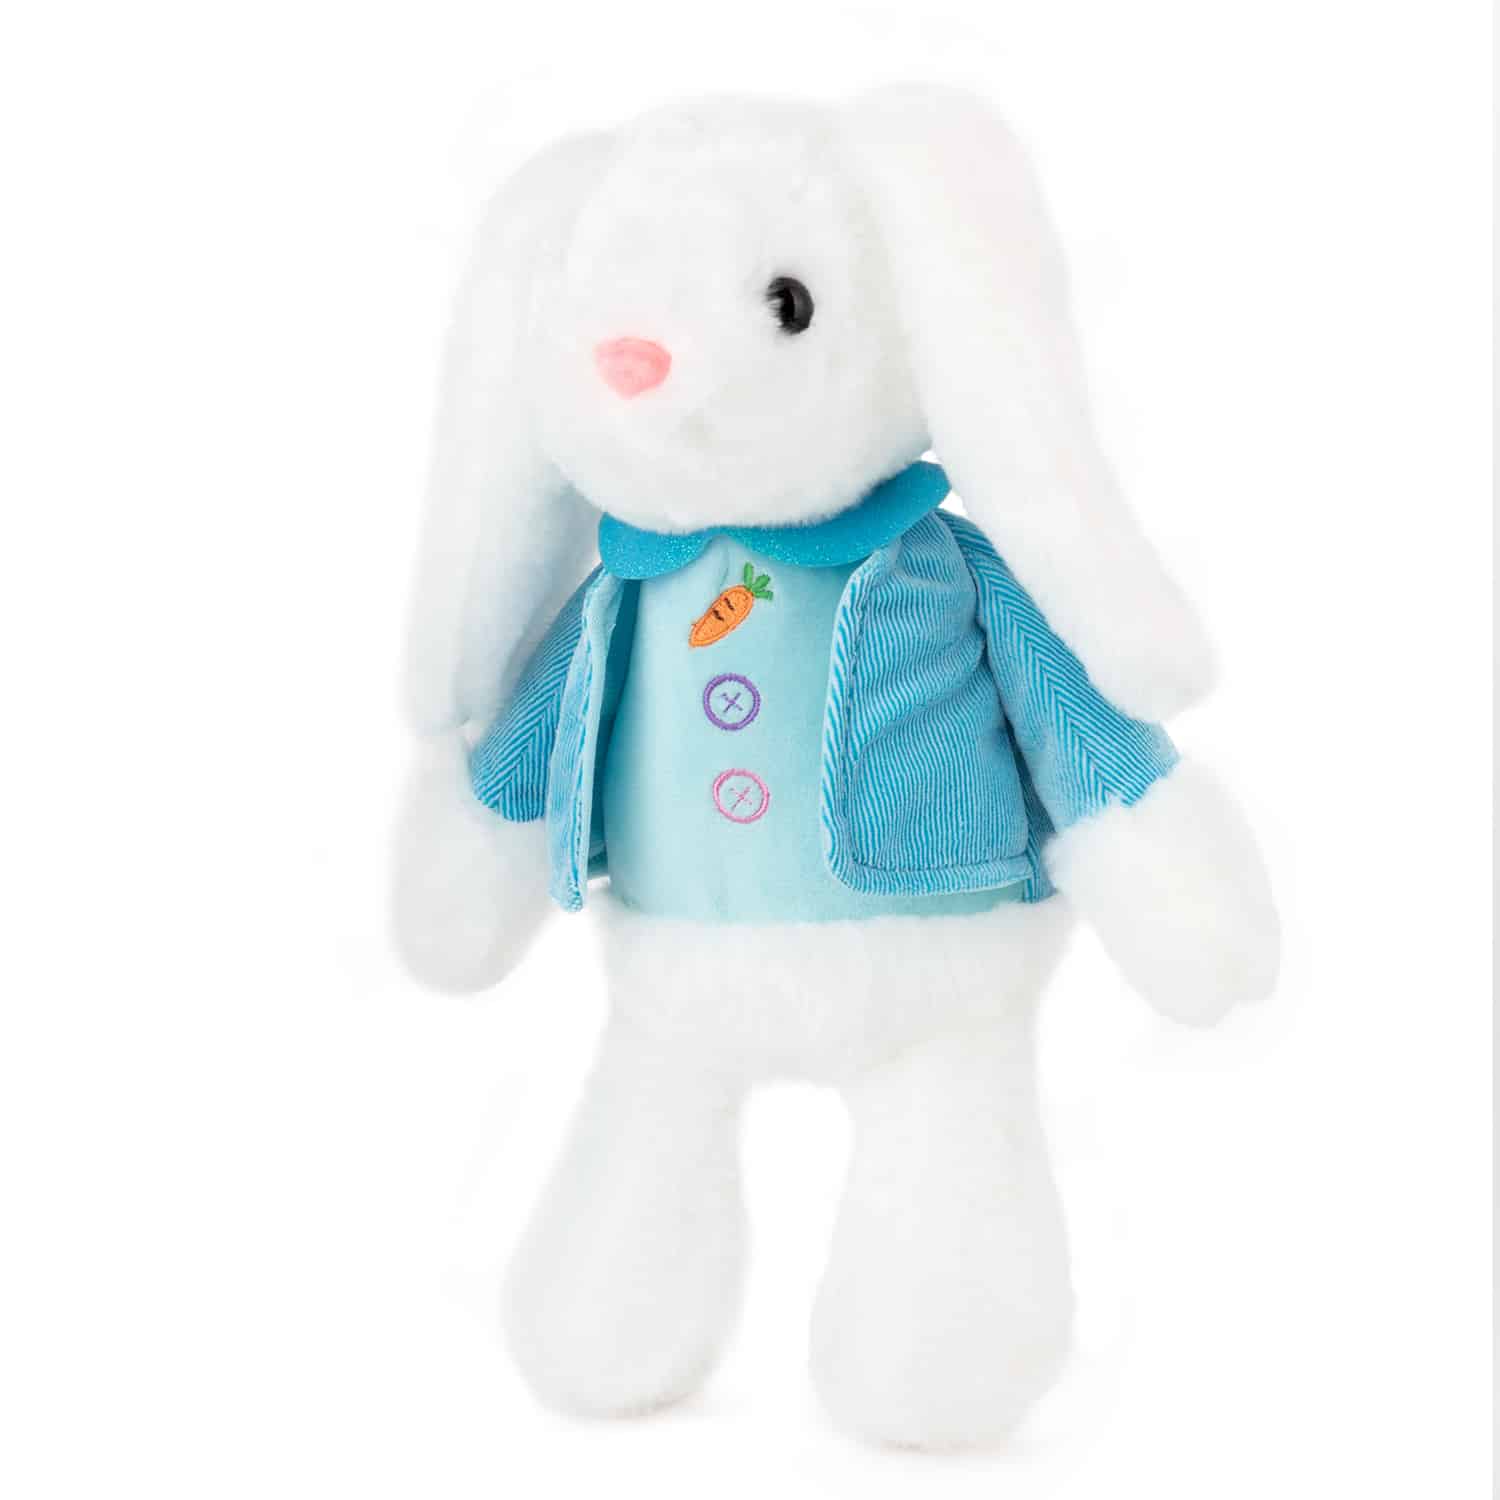 Rabbit - White with a blue vest